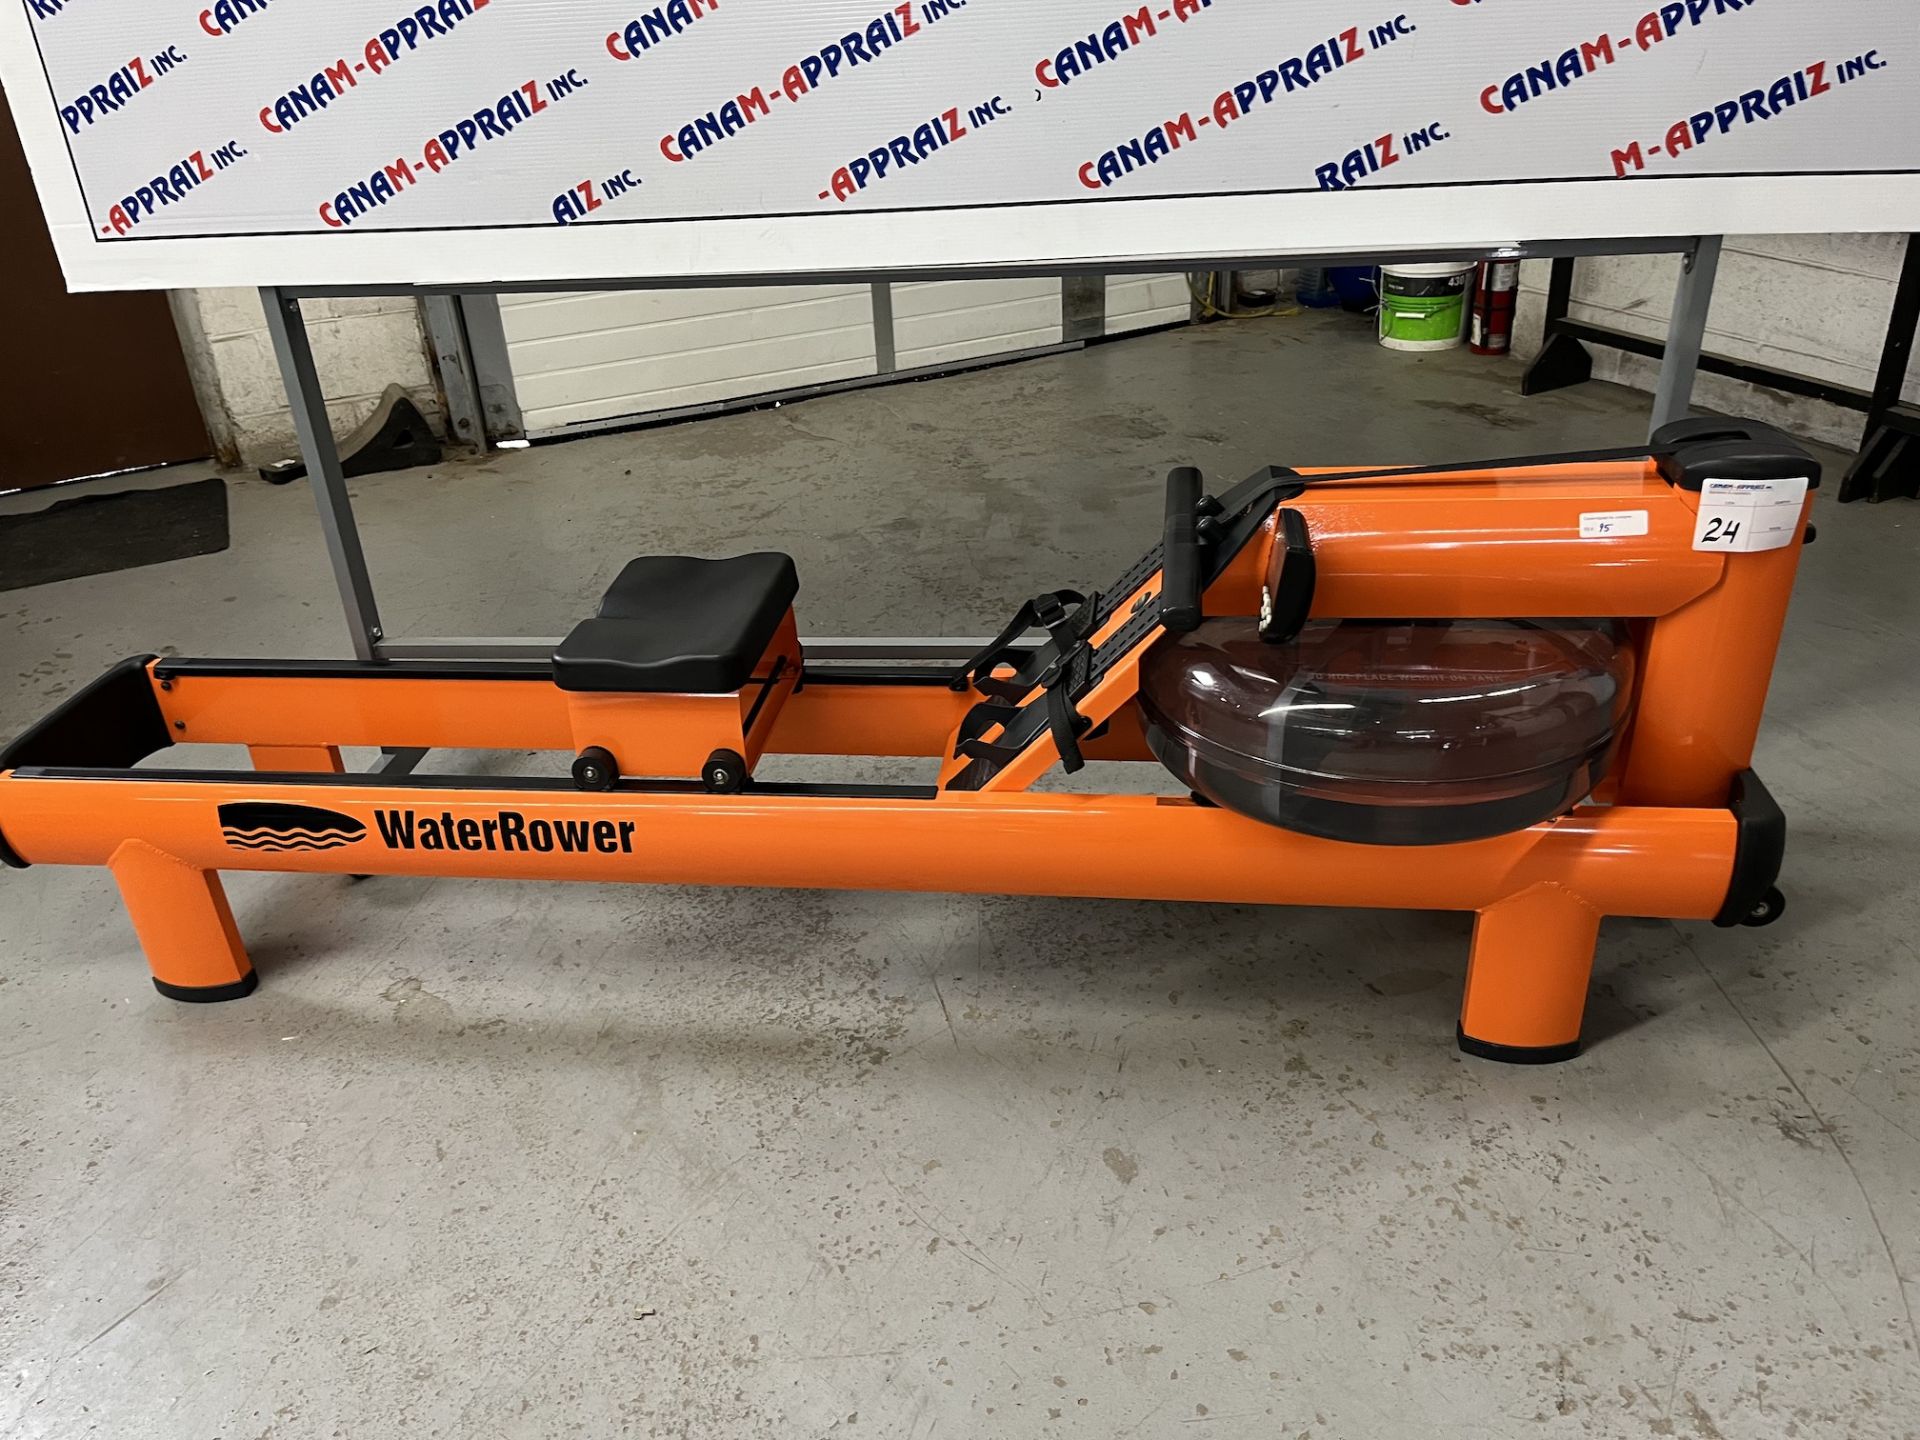 WaterRower - Orange Rowing Exercise Machine - Image 2 of 3